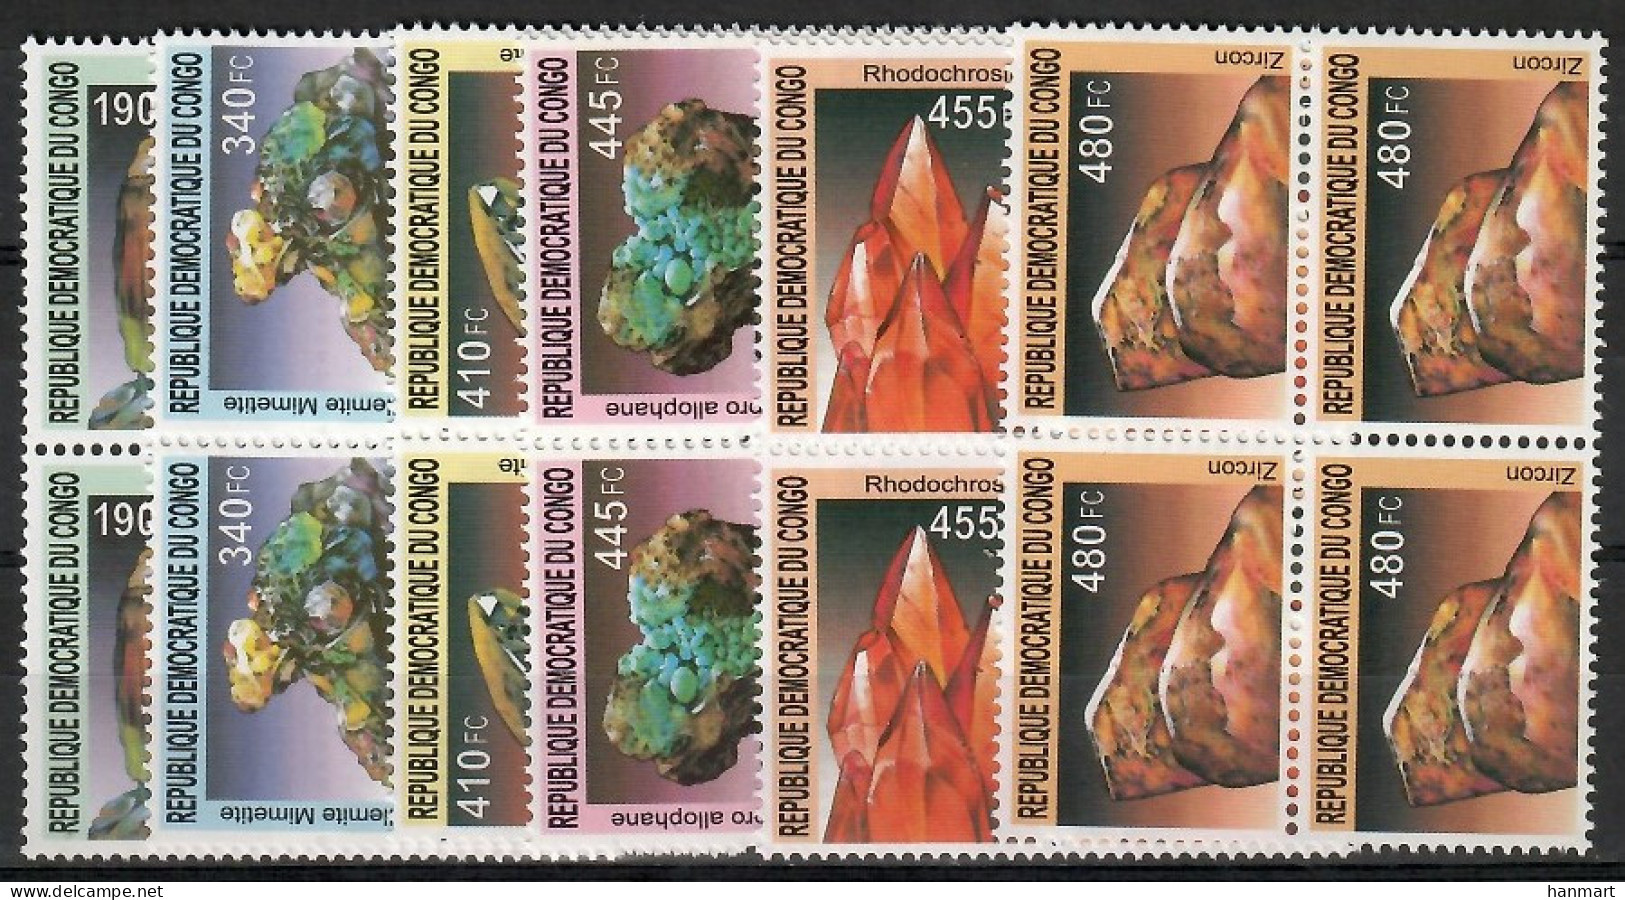 Congo, Democratic Republic (Kinshasa) 2002 Mi 1713-1718 MNH  (ZS6 ZREvie1713-1718) - Minerales